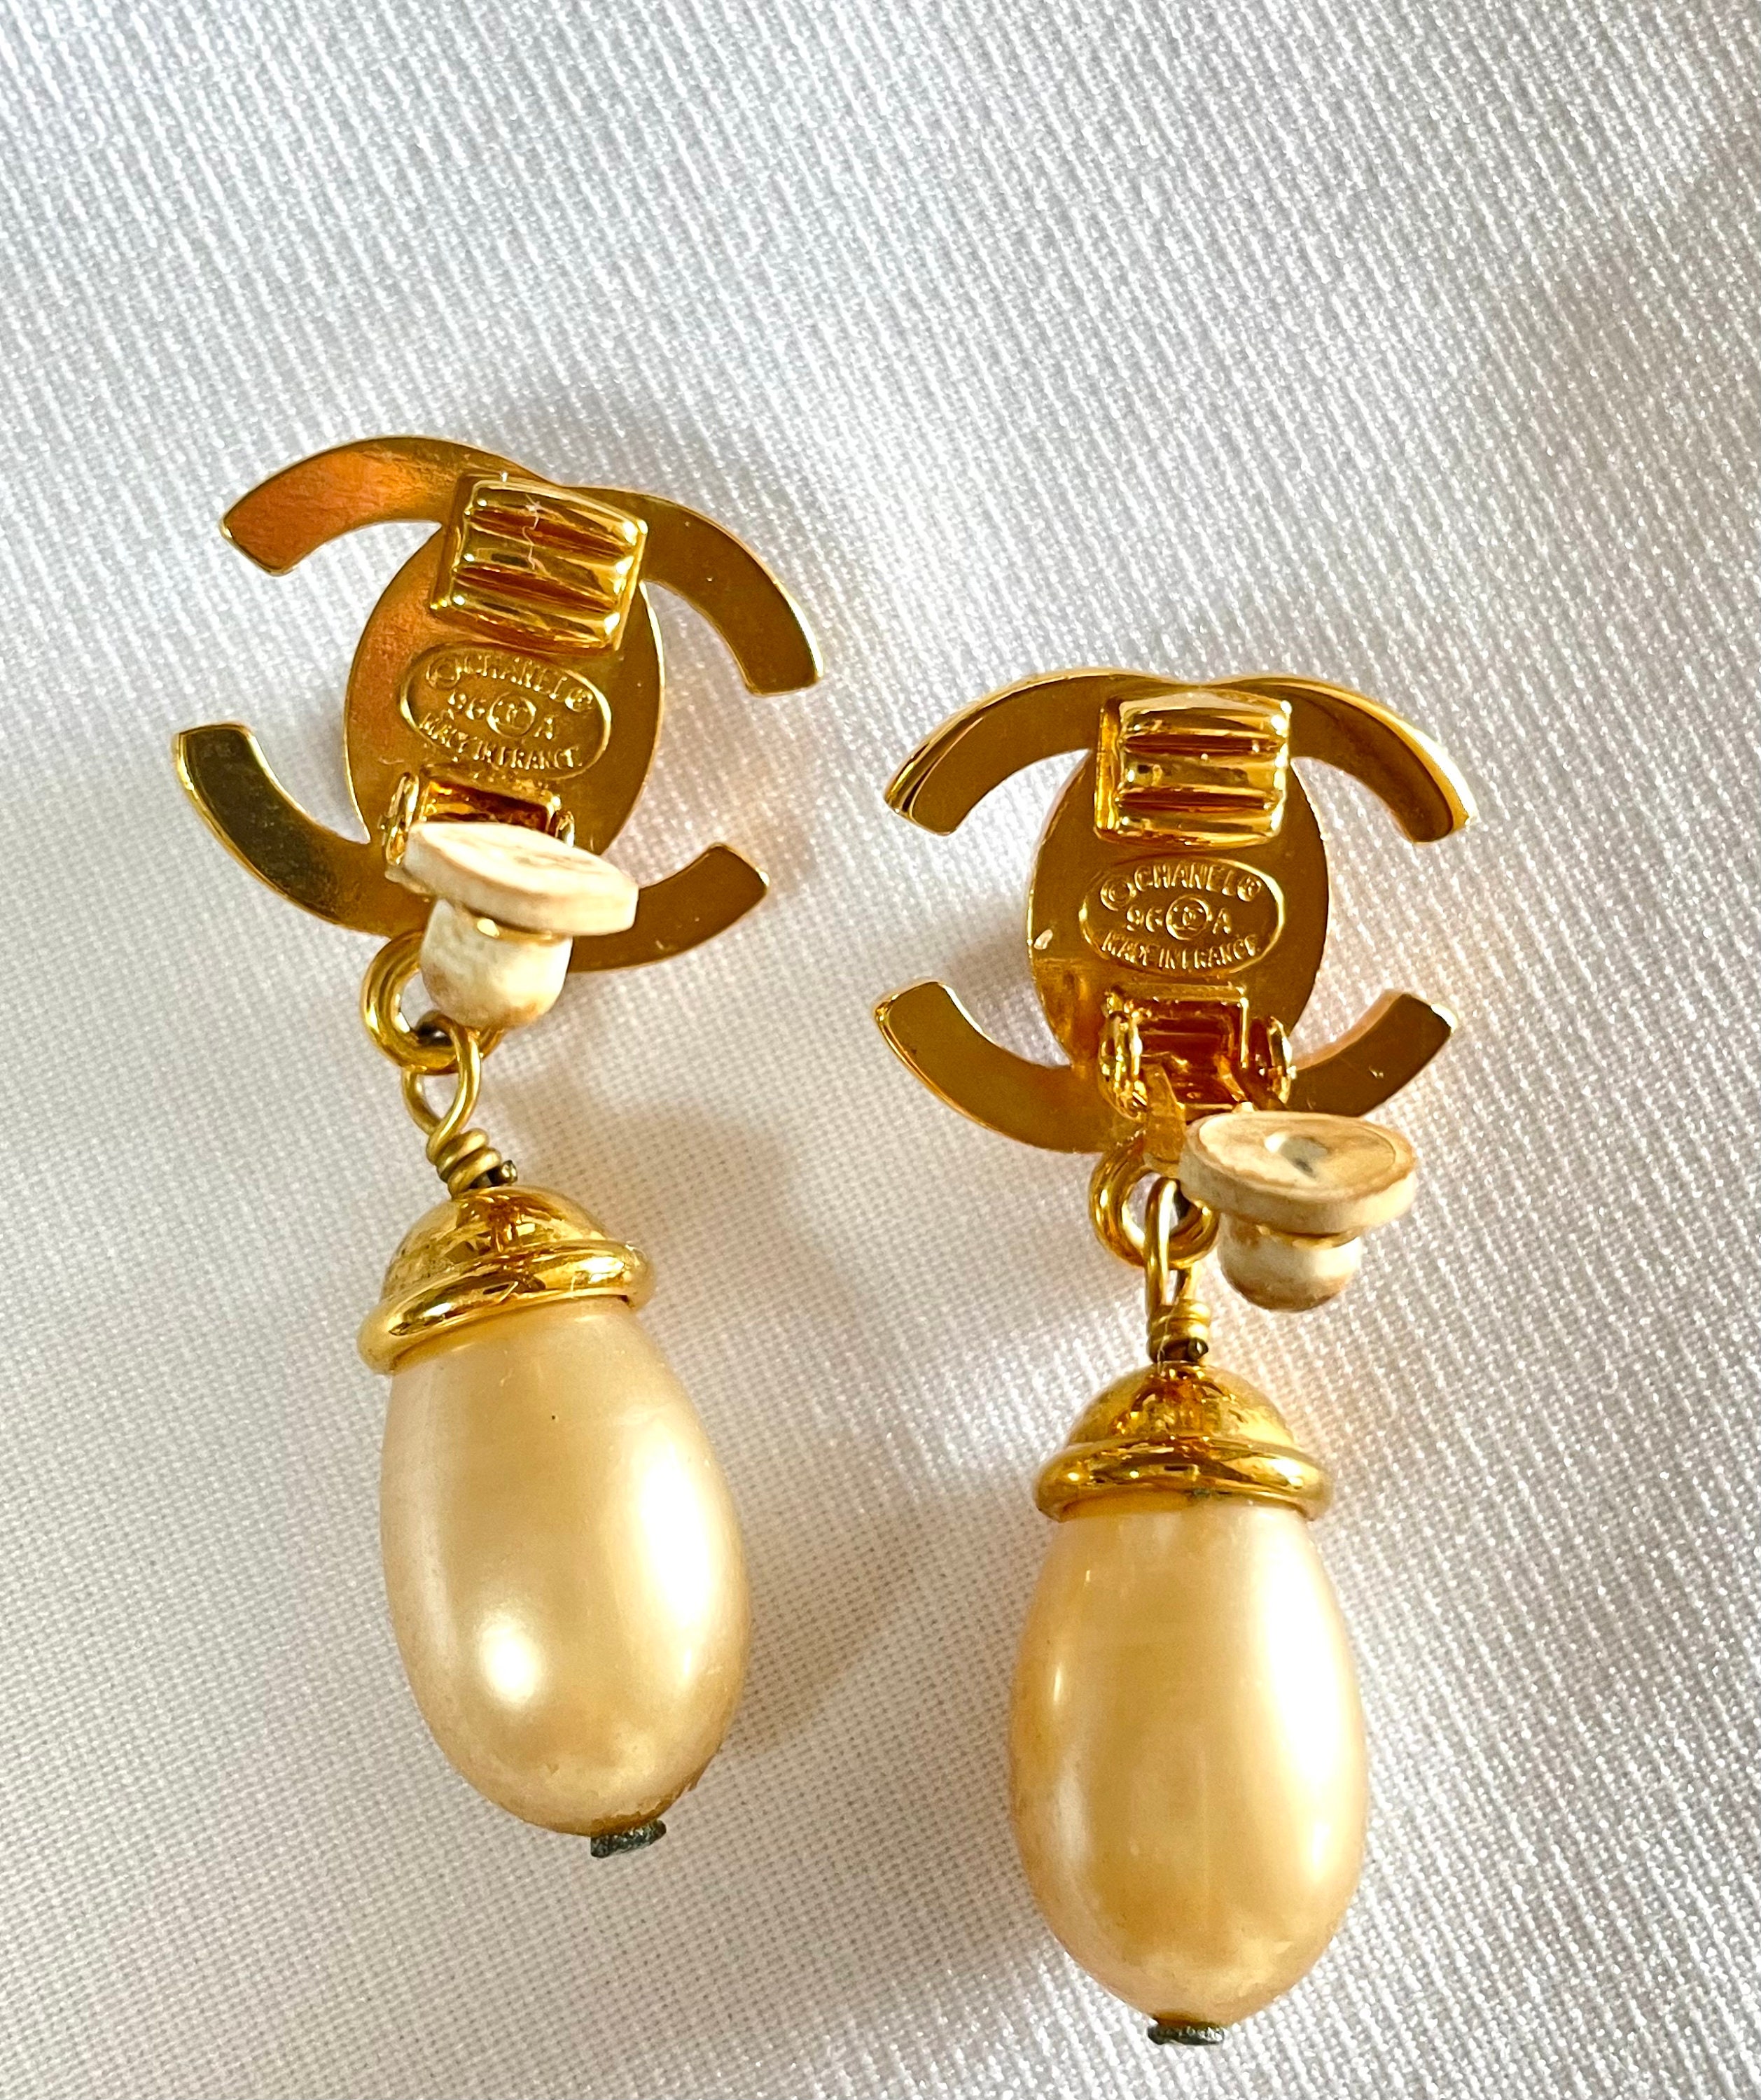 Authentic vintage Chanel earrings turnlock CC logo pearl dangle classy